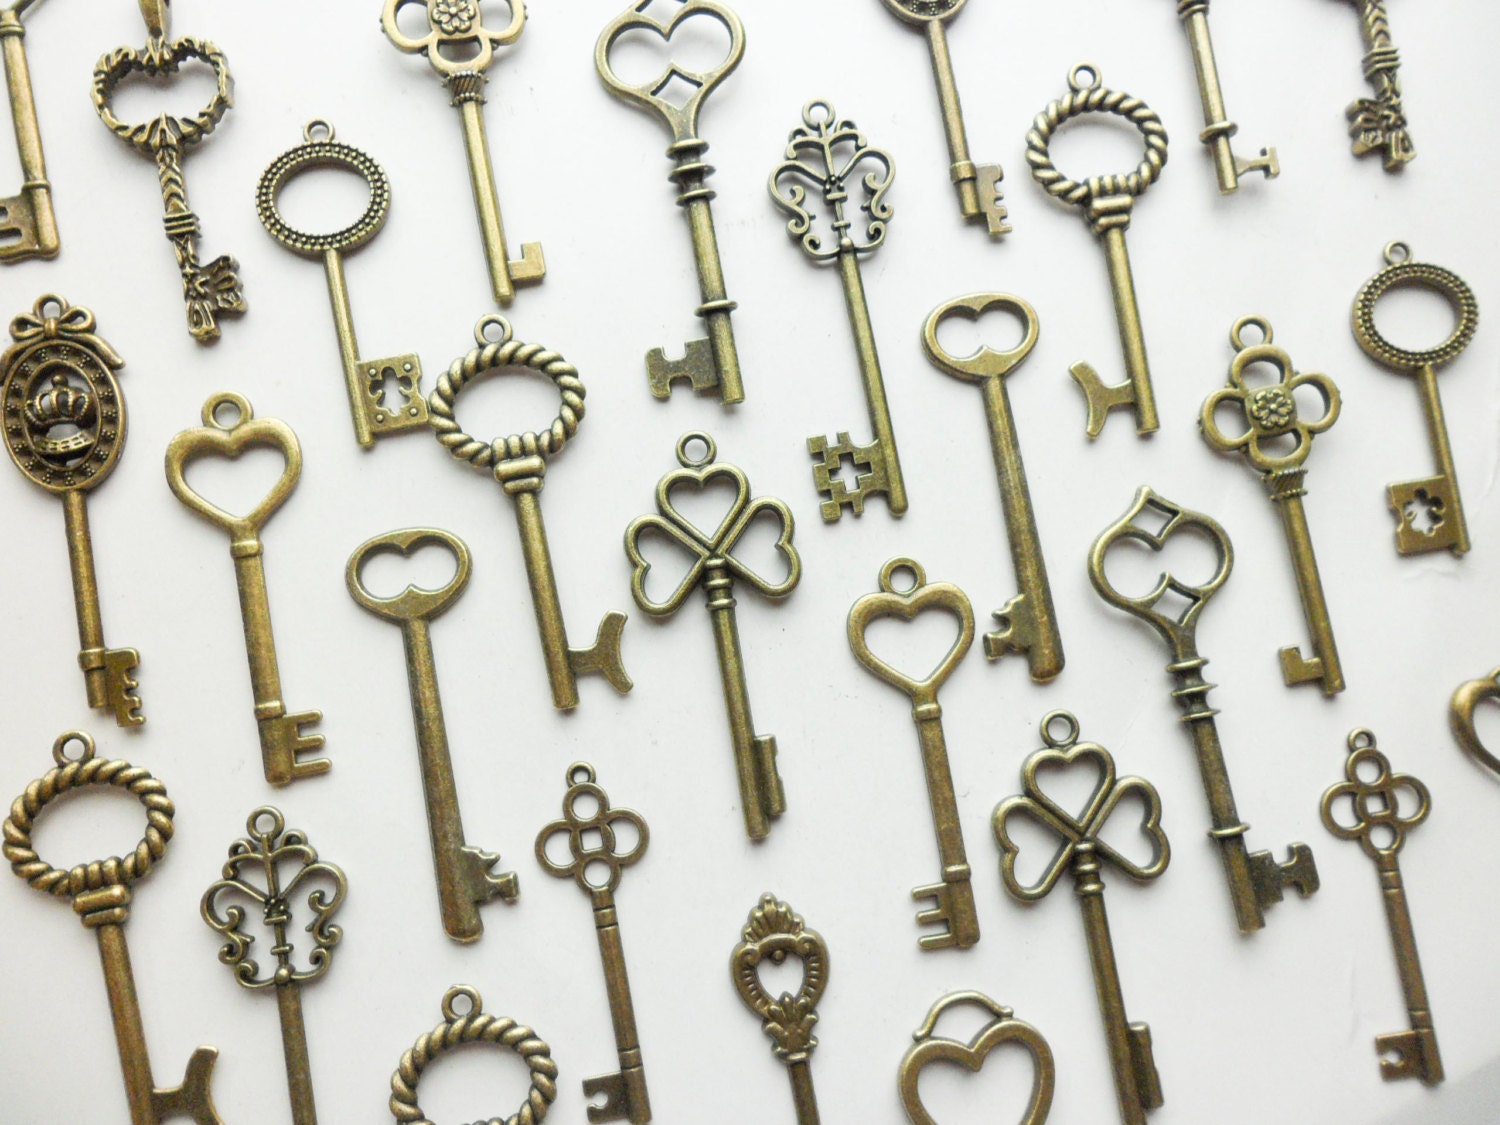 70pcs vintage crown keys antique skeleton keys pendant heart